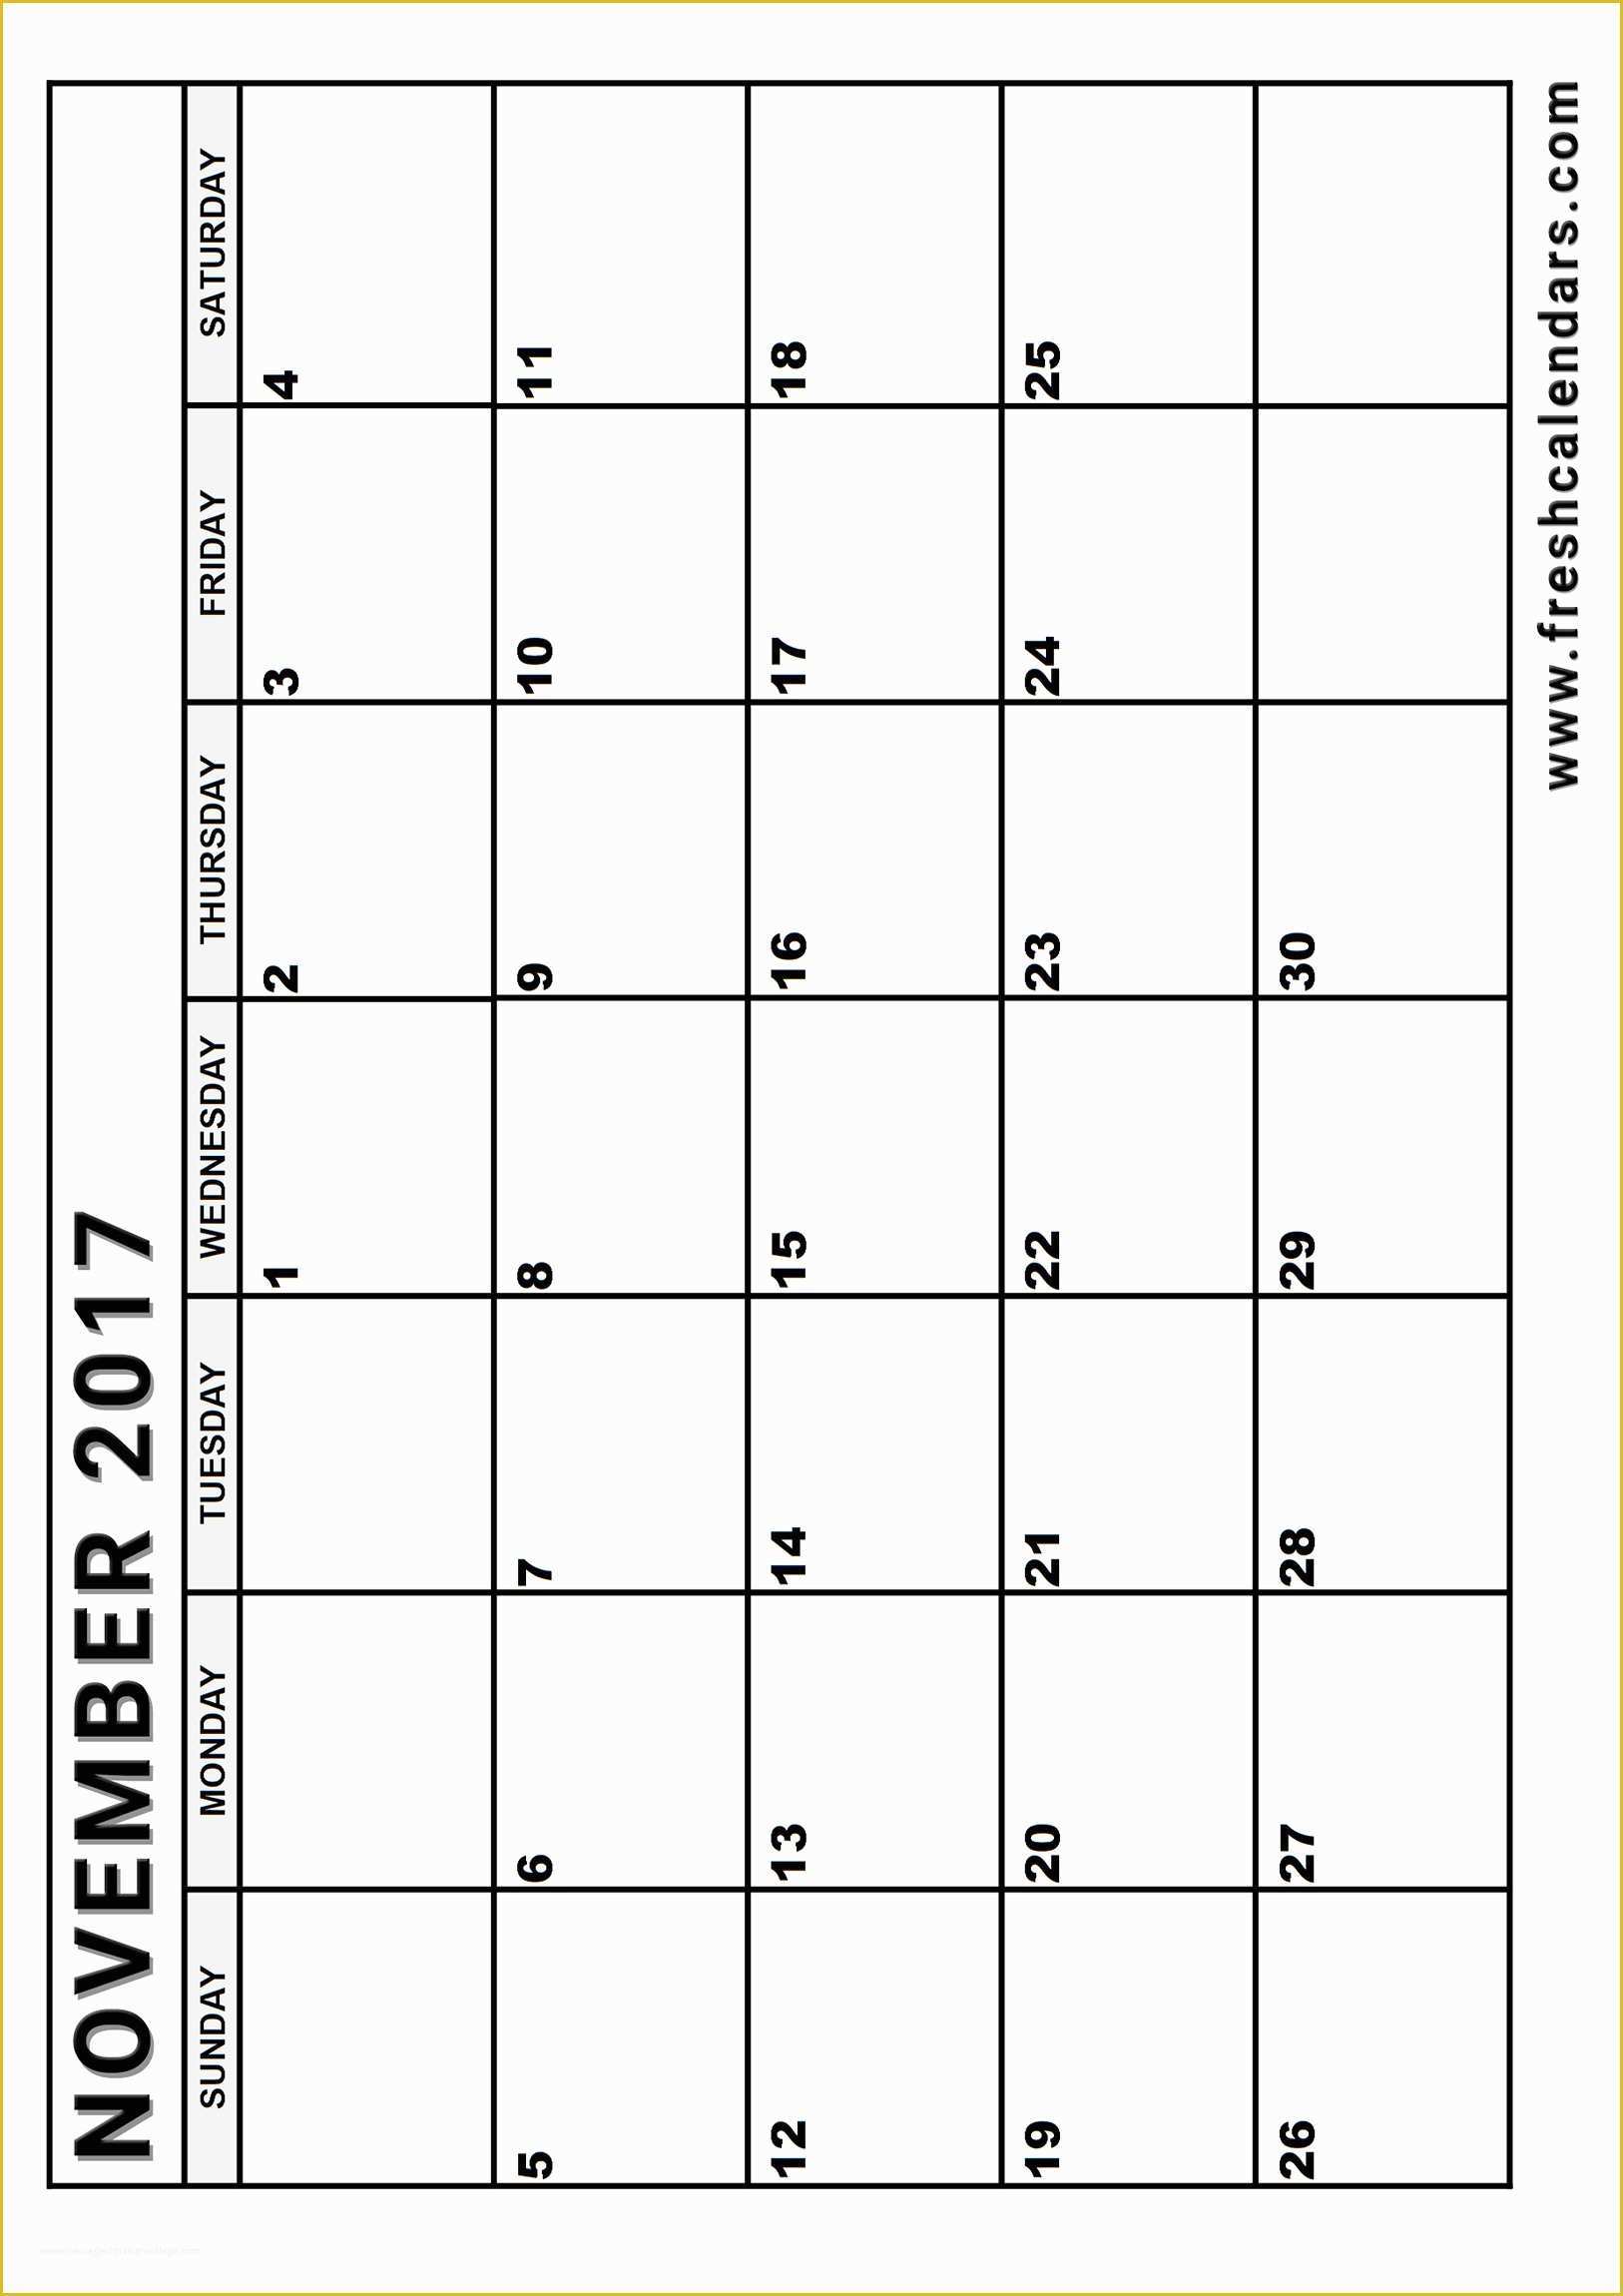 Free Calendar Template 2017 November Of Blank November 2017 Calendar Printable Templates